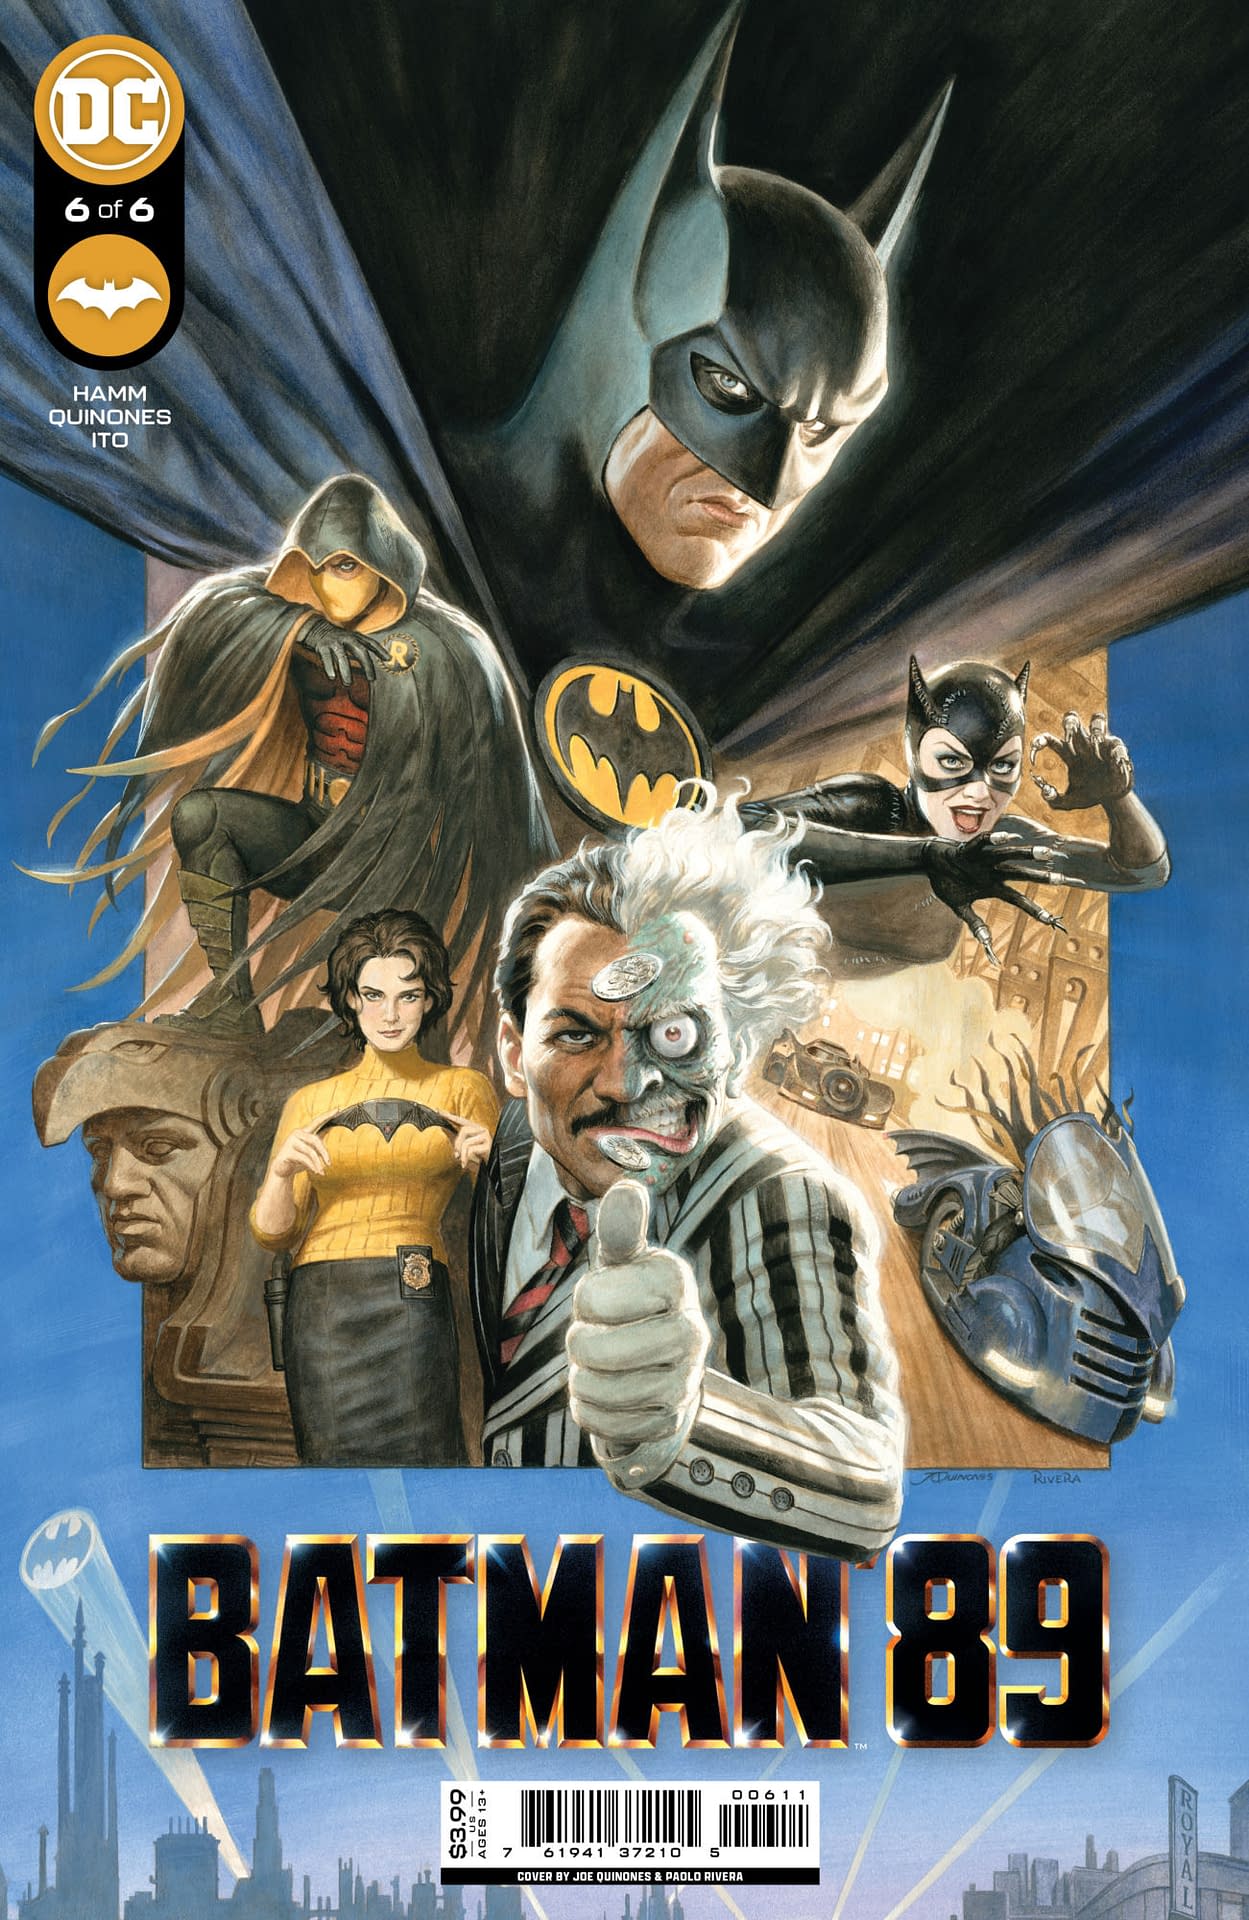 Batman '89 #6 Preview: Not So Secret Identity